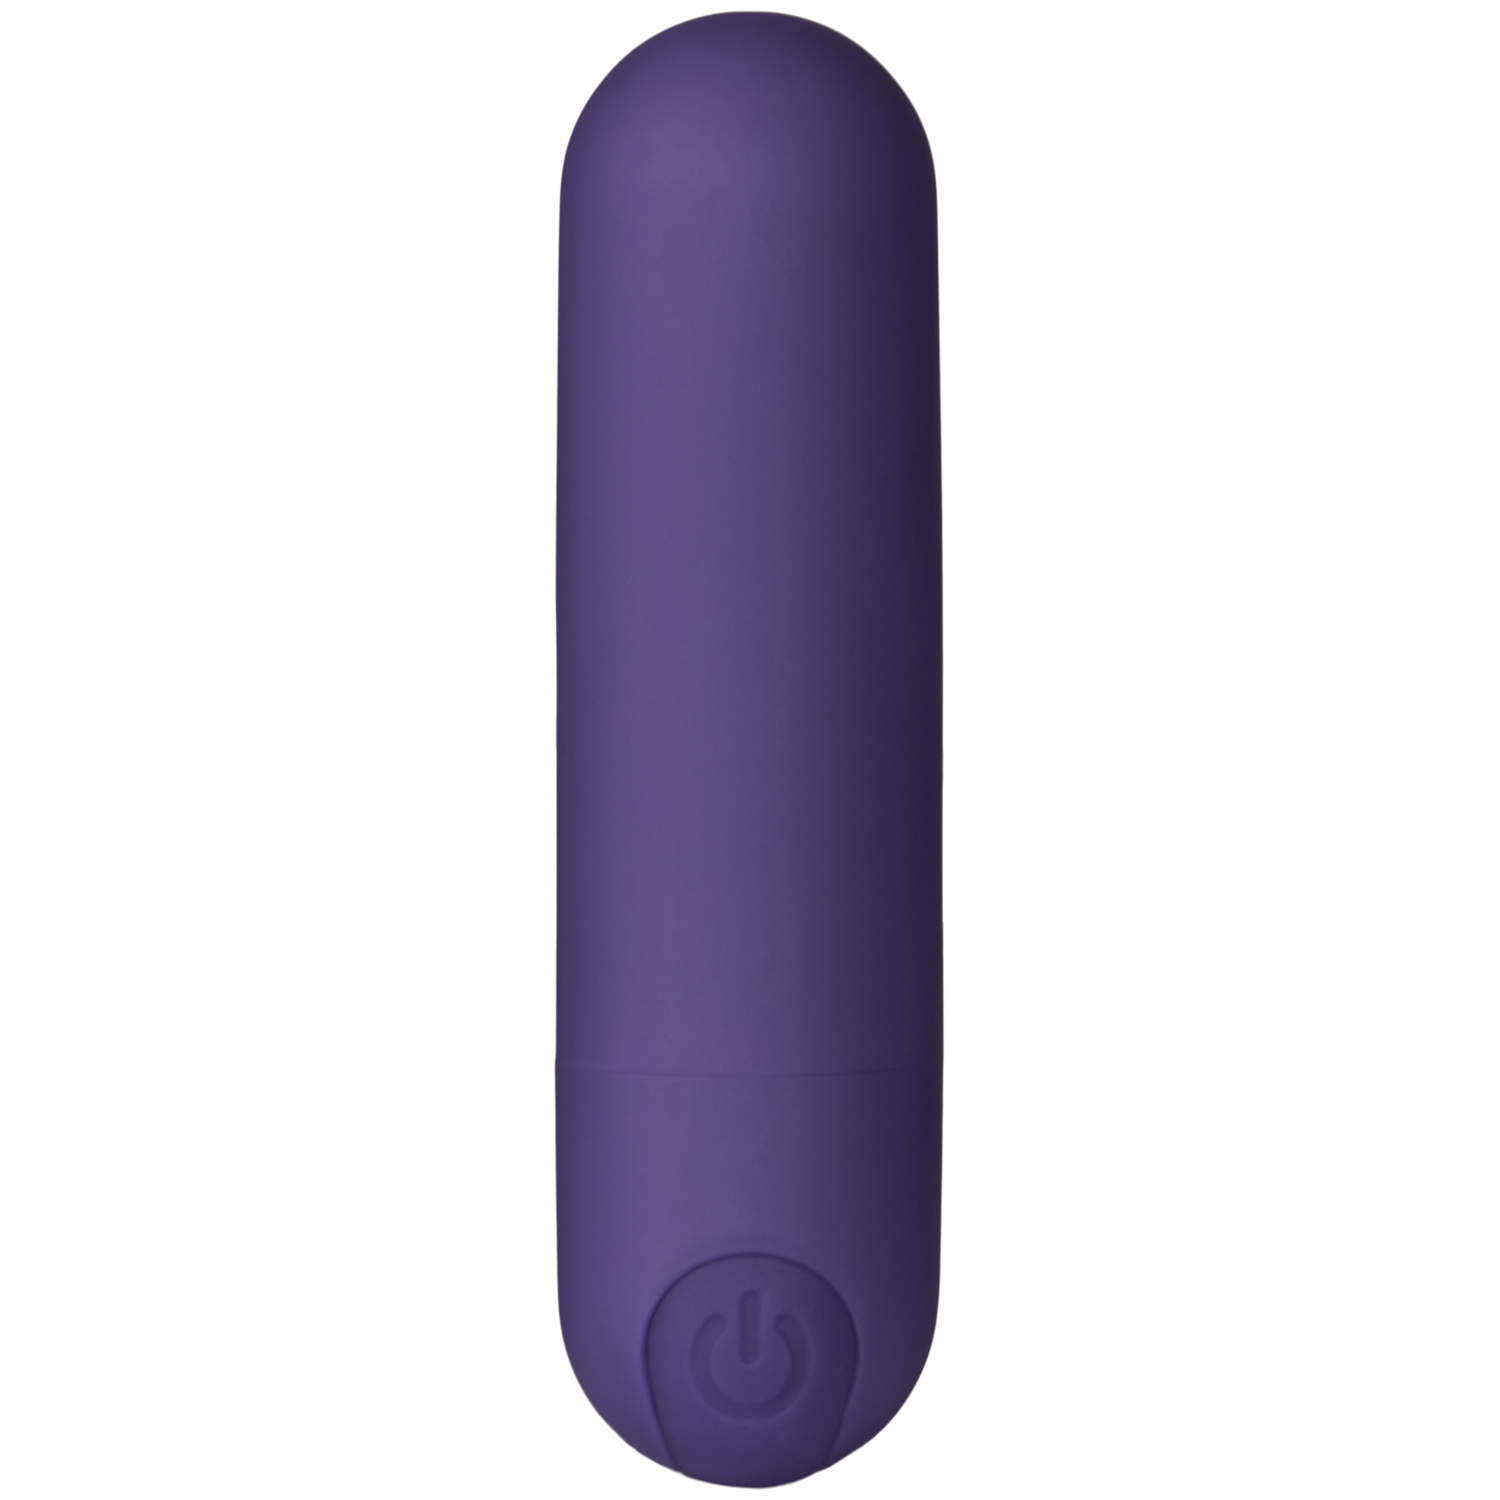 Sinful Passion Purple Opladelig Power Bullet Vibrator - Purple